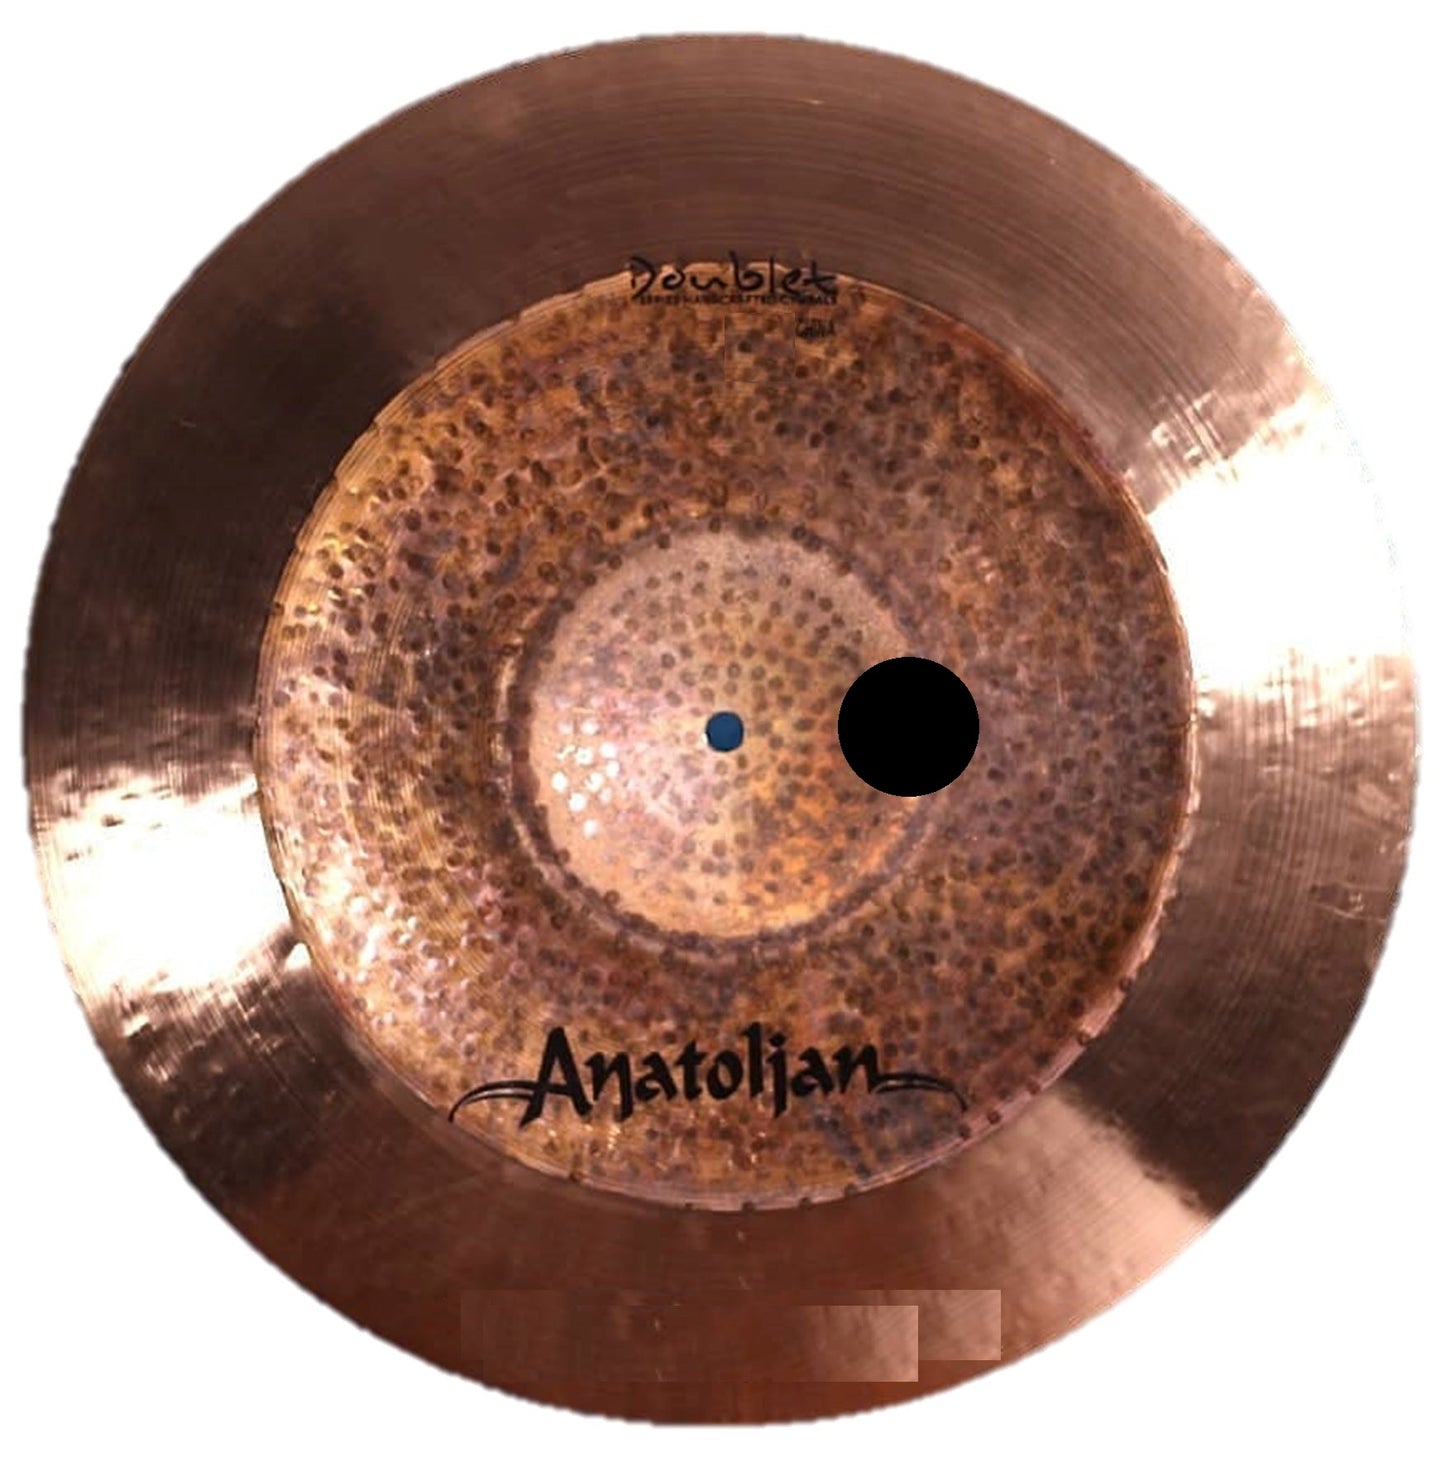 Anatolian Cymbals Doublet Series